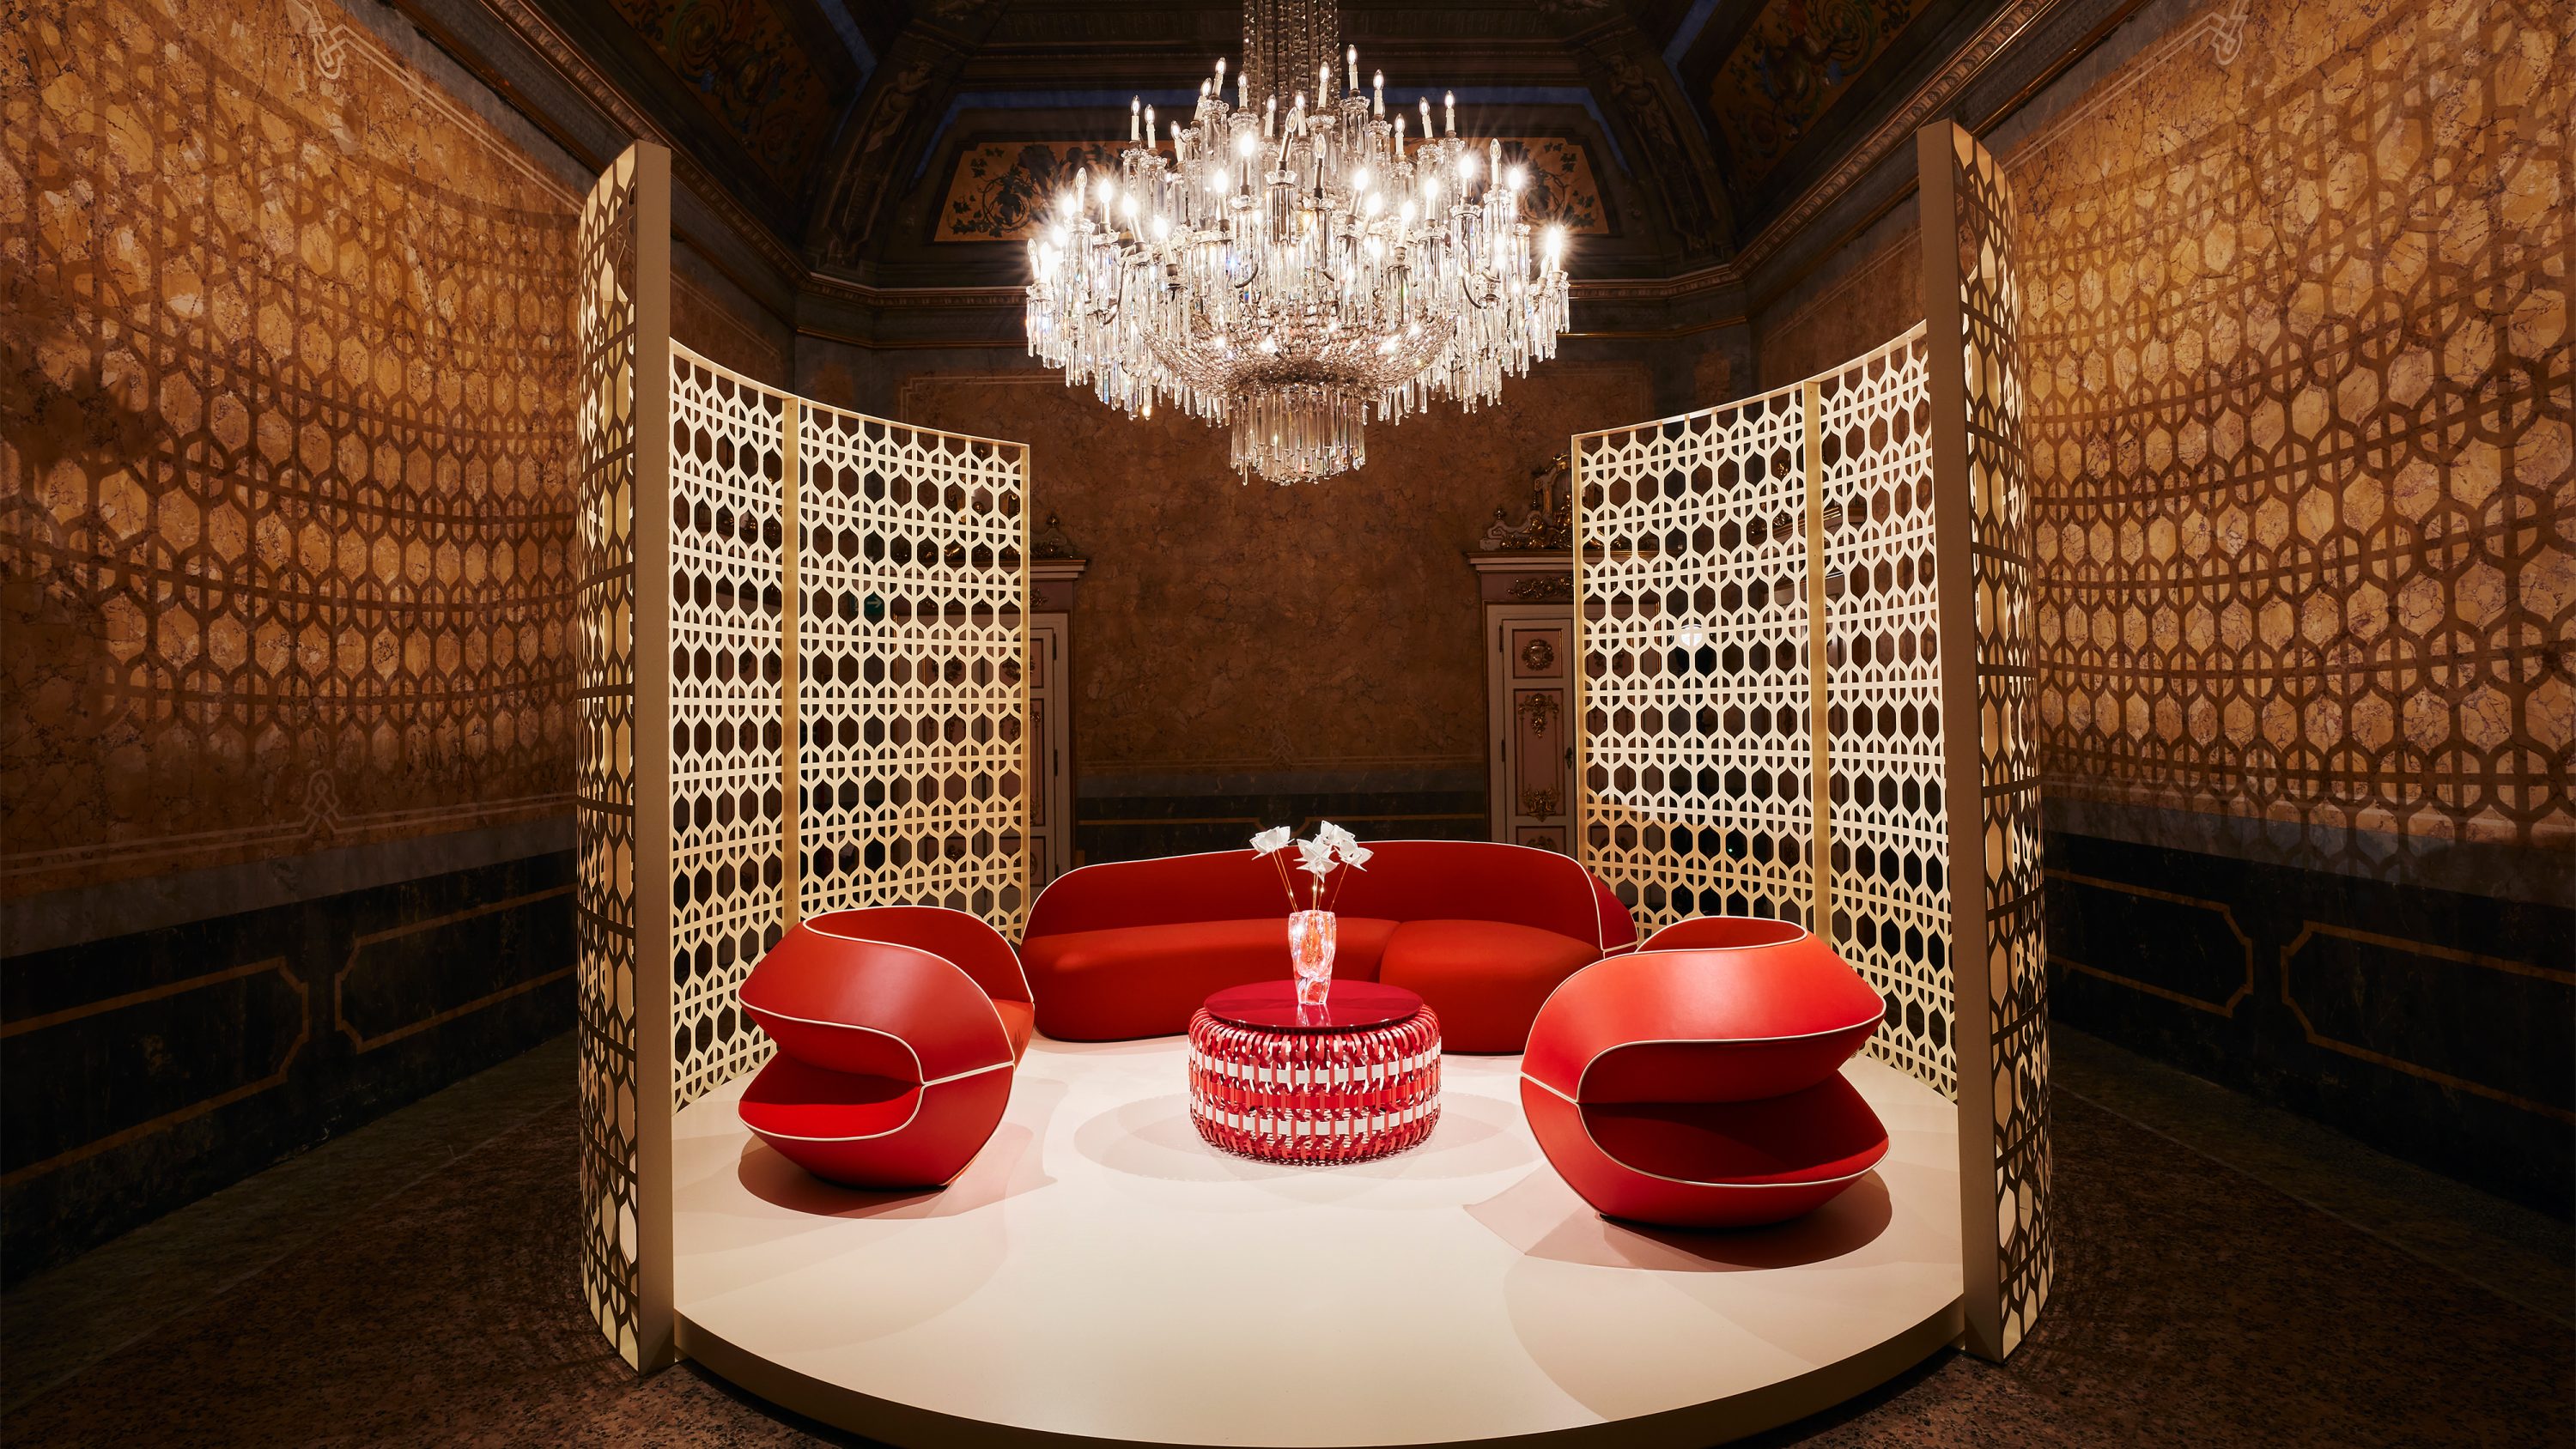 Louis Vuitton Objets Nomades - Milan Design week 2022 - ZOE Magazine